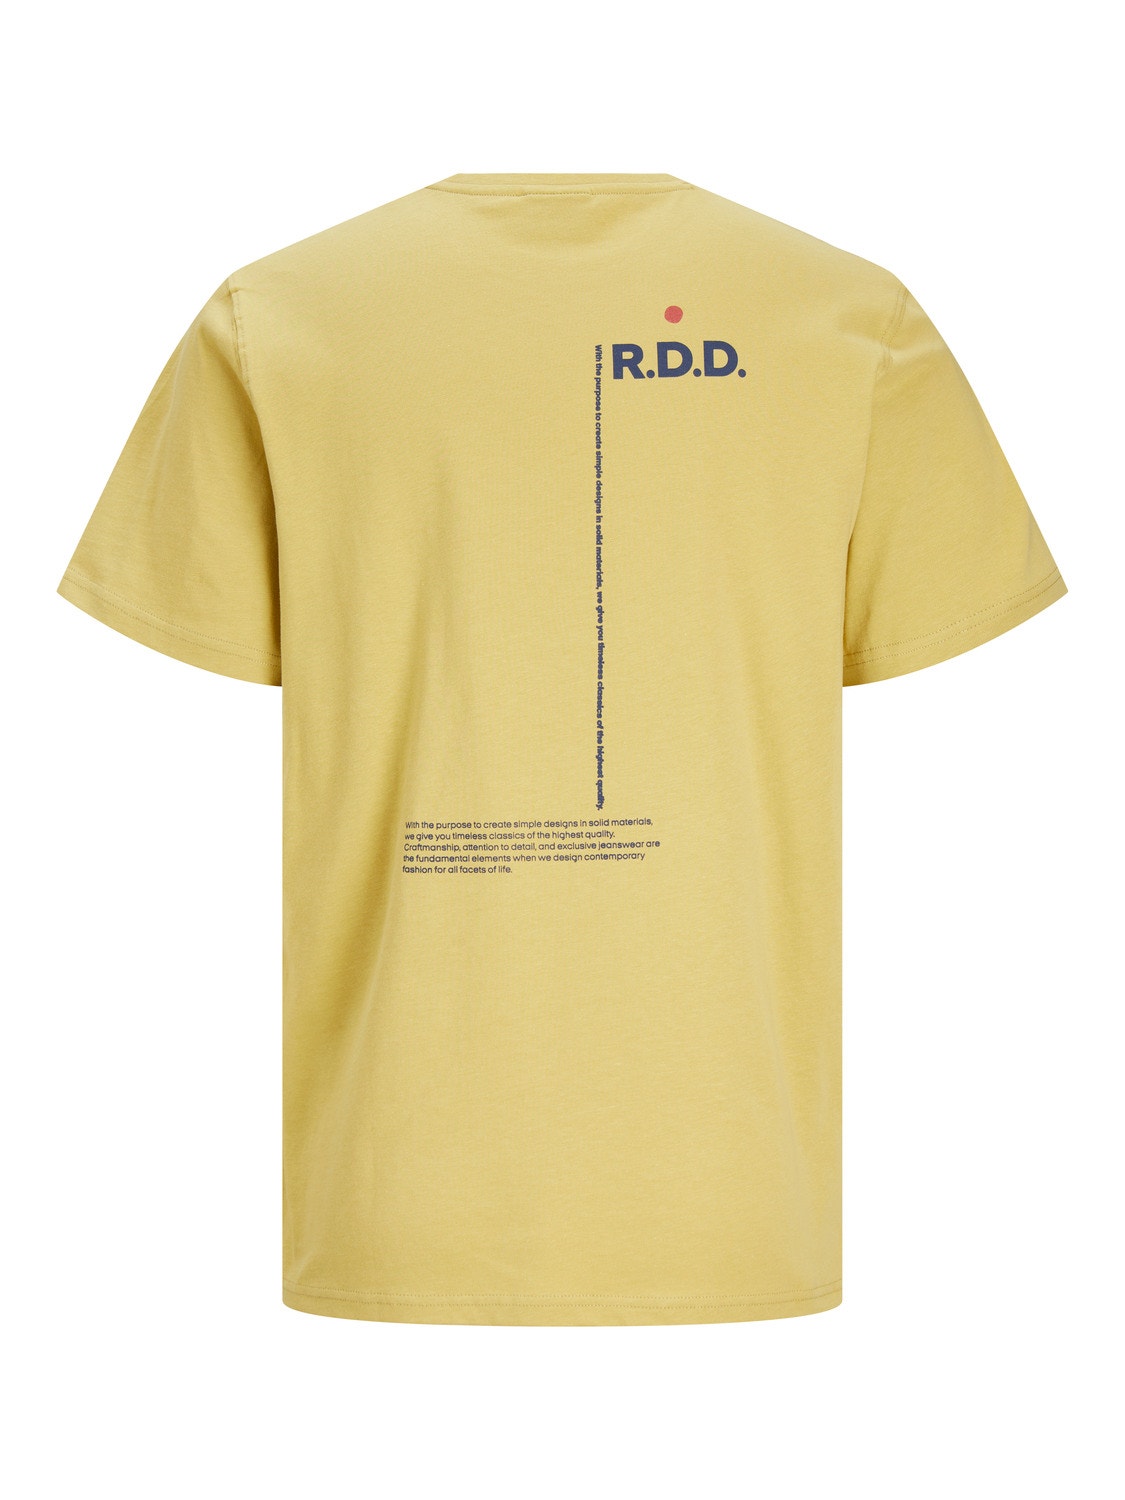 Jack & Jones RDD Printed Crew neck T-shirt -Antique Gold - 12252153